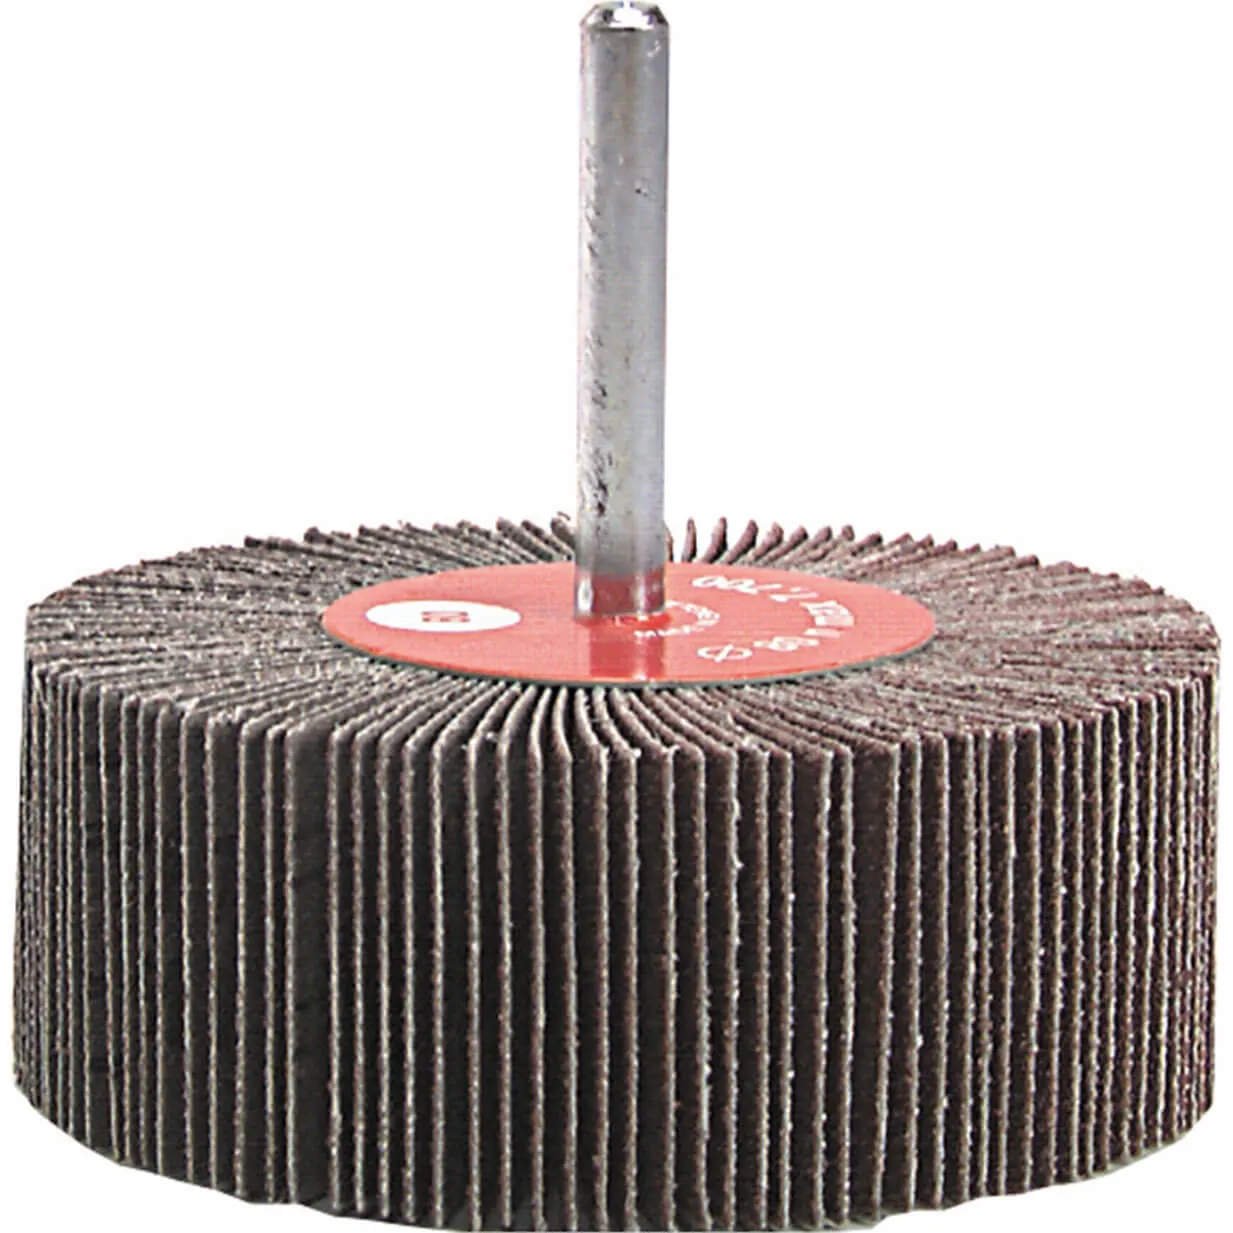 Black and Decker Piranha Abrasive Flap Wheel - 40mm, 20mm, 80g